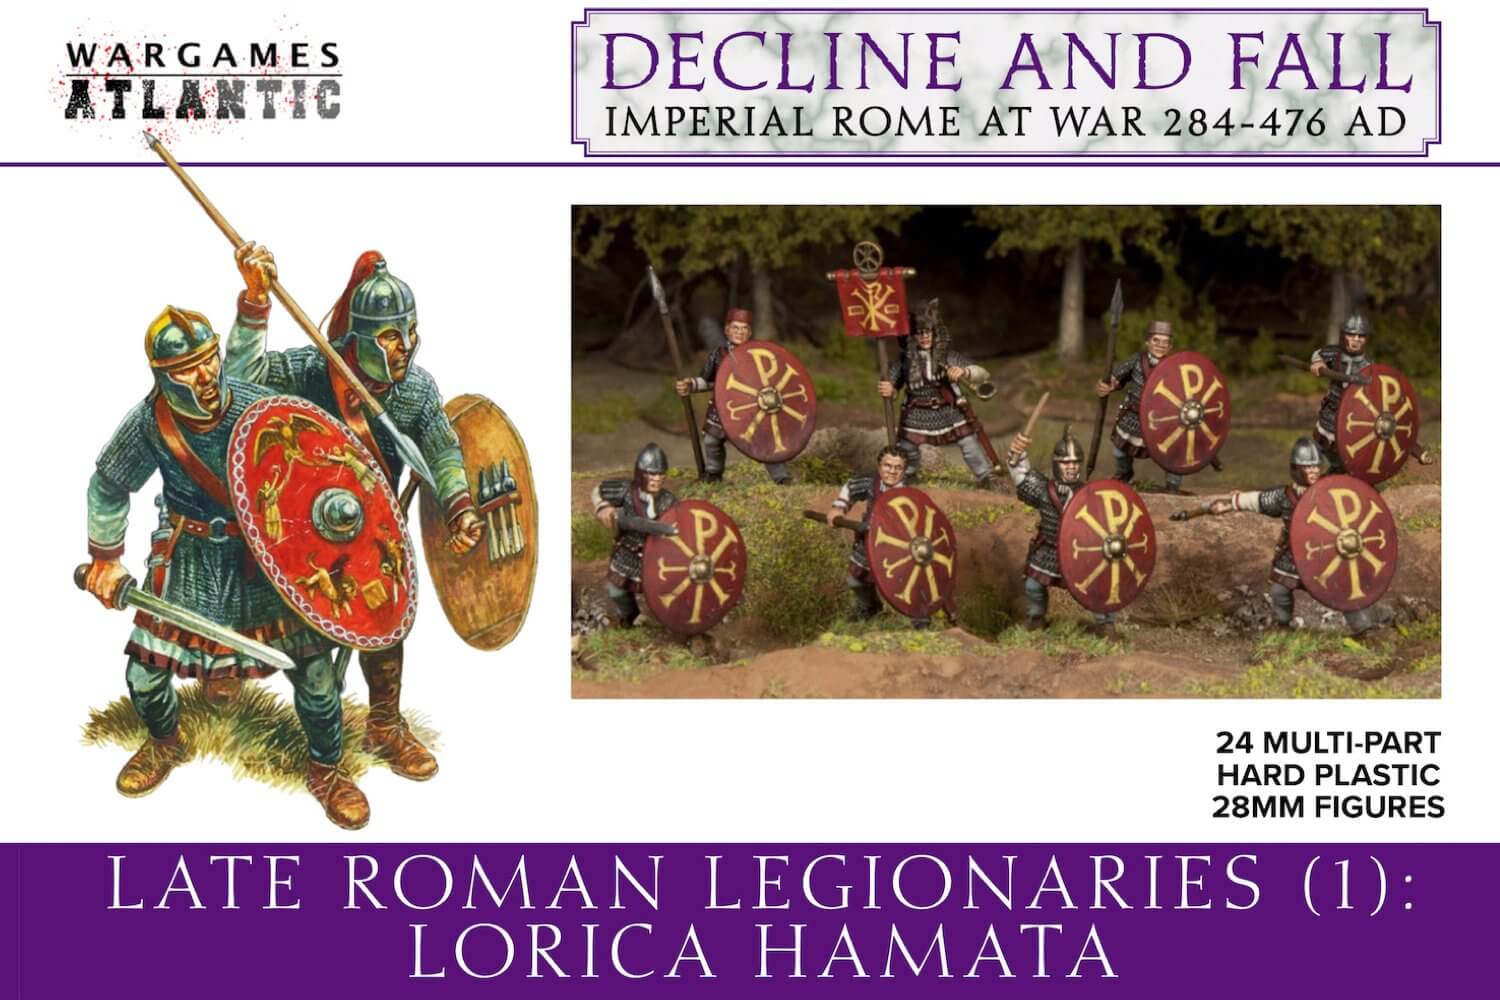 LATE ROMAN LEGIONARIES (1) LORICA HAMATA DECLINE AND FALL IMPERIAL ROME AT WAR 284-476 AD BY WARGAMES ATLANTIC